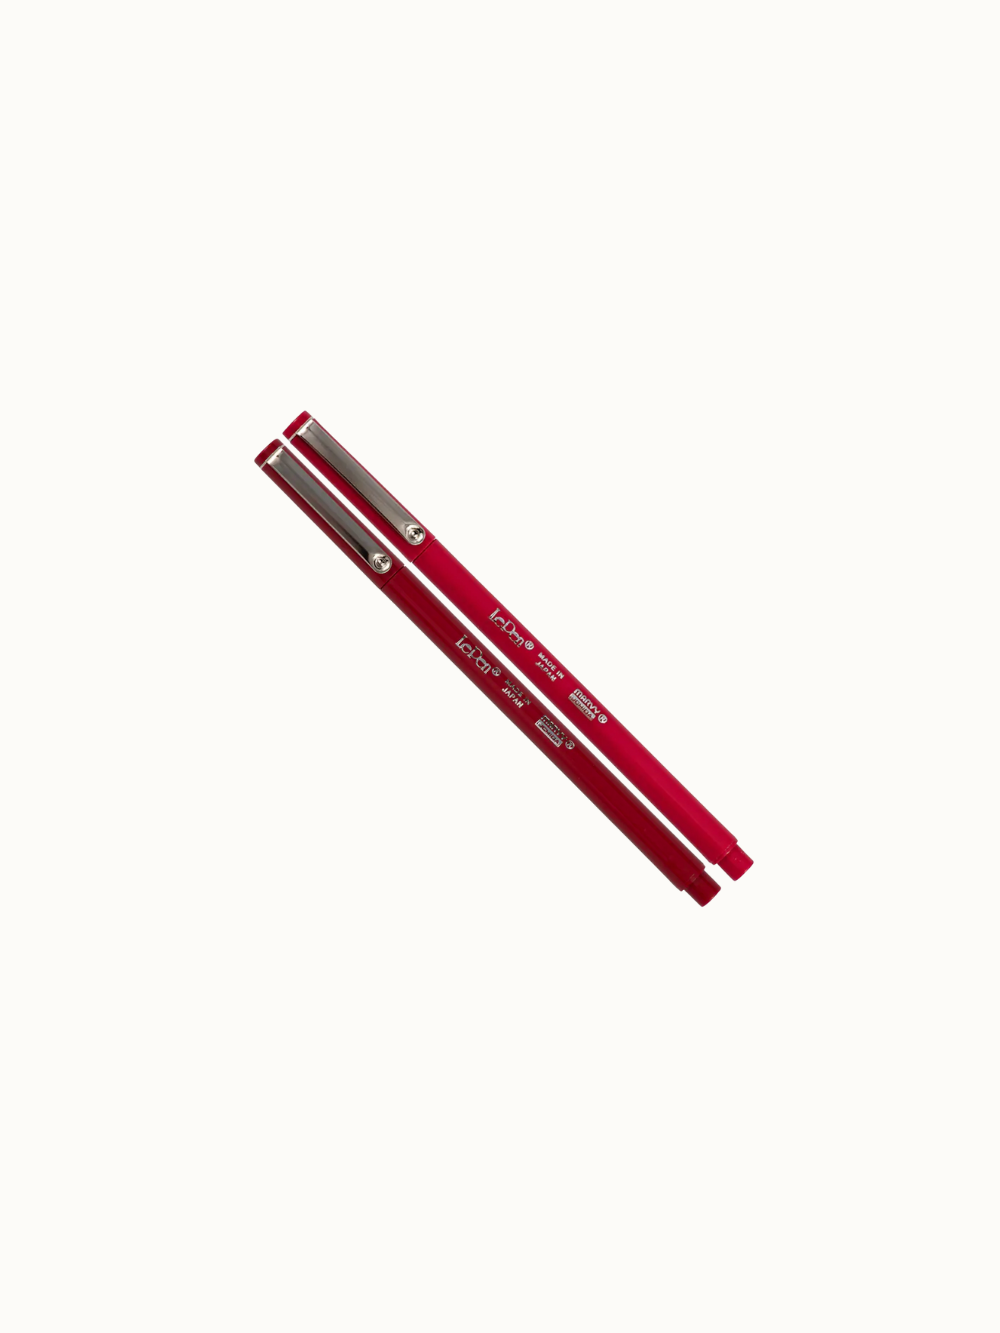 Pen Duo - Reds